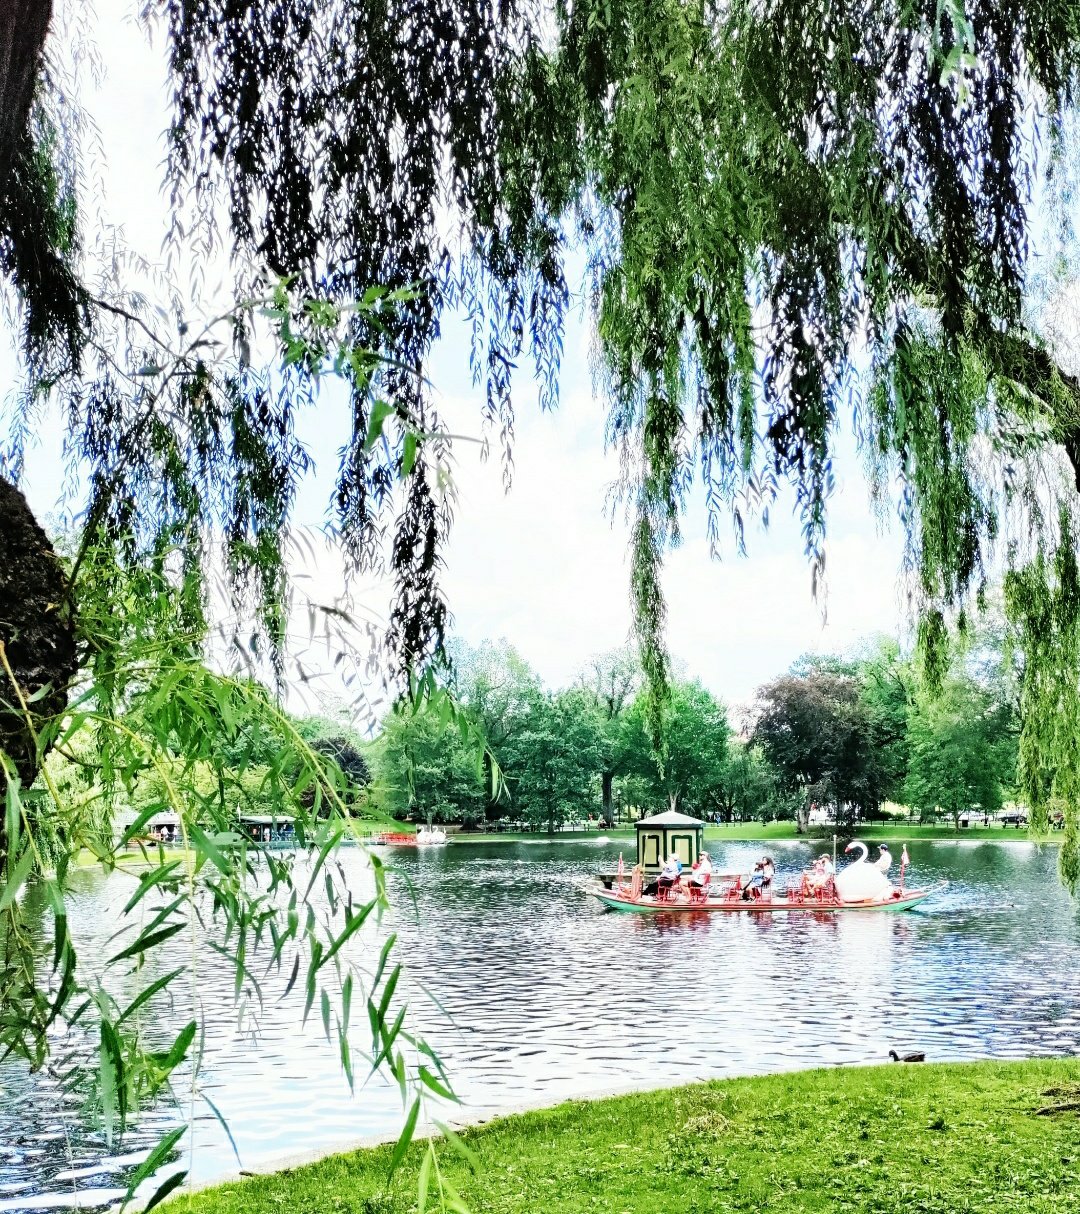 Visitors often ride the Swan Boats at Boston Common